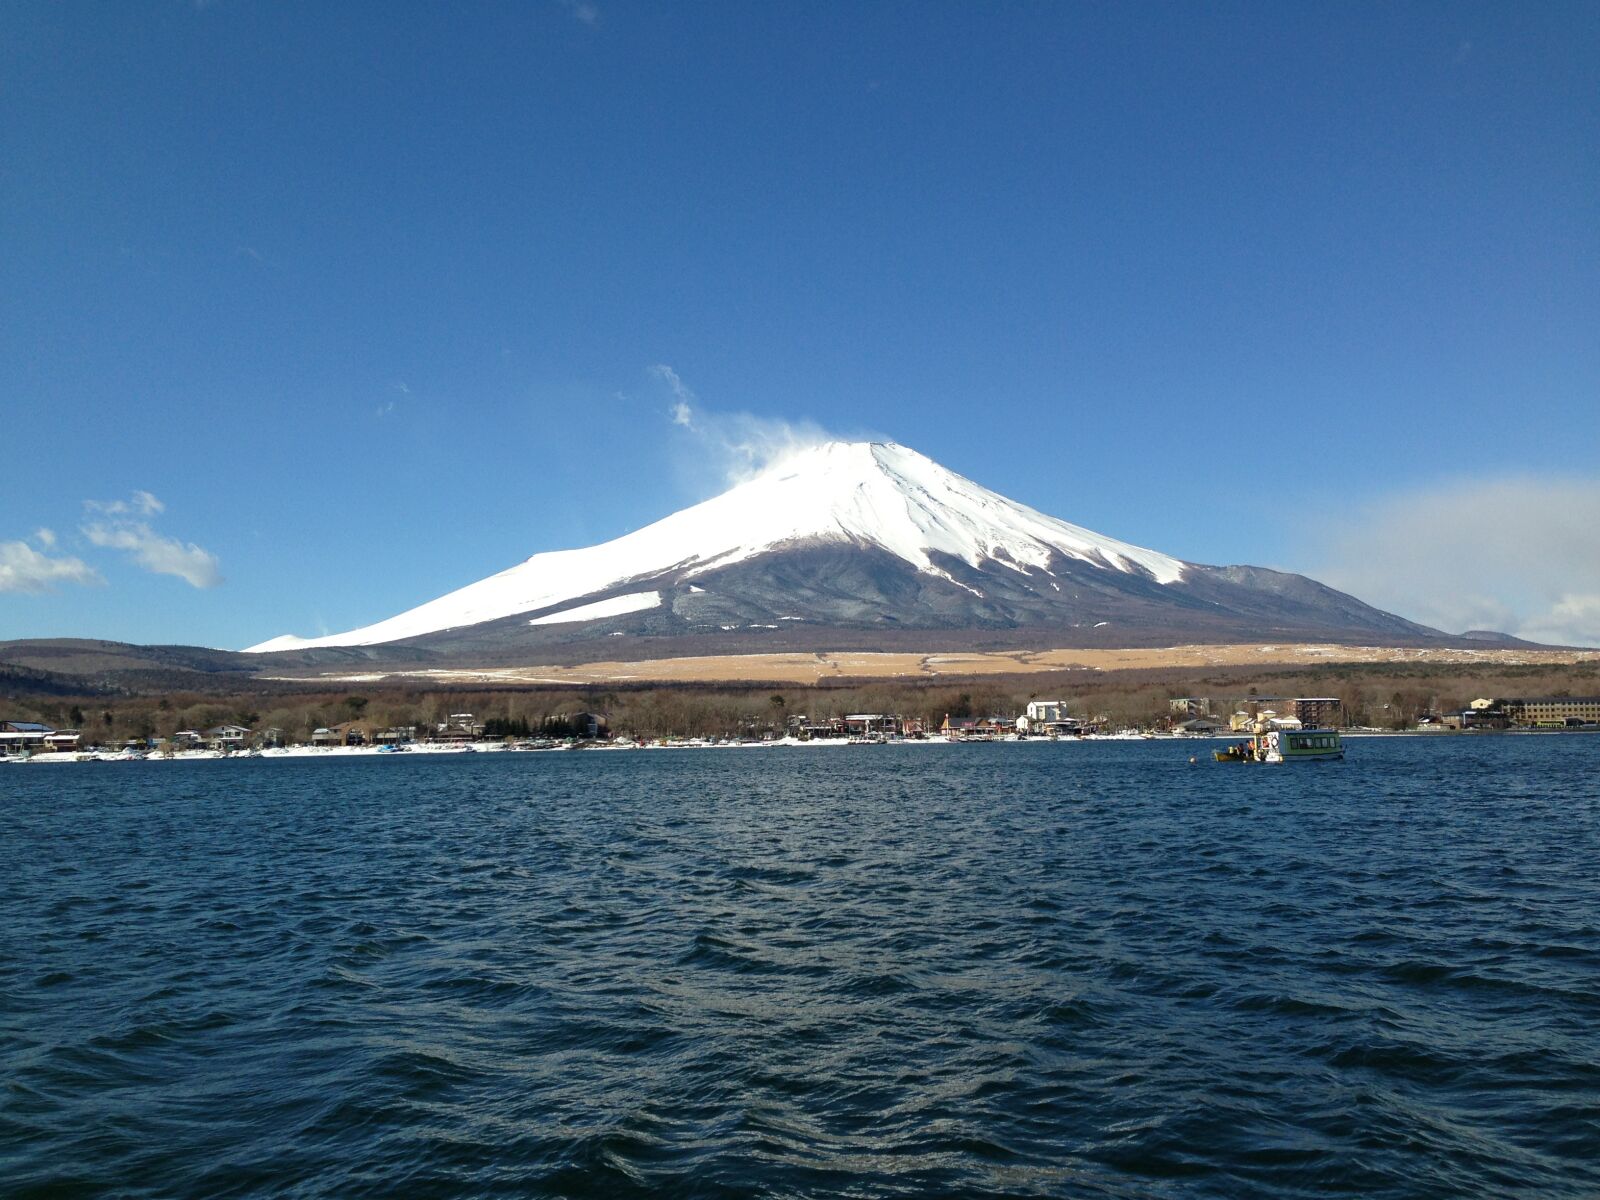 Apple iPhone 5 sample photo. Lake yamanaka, from the photography